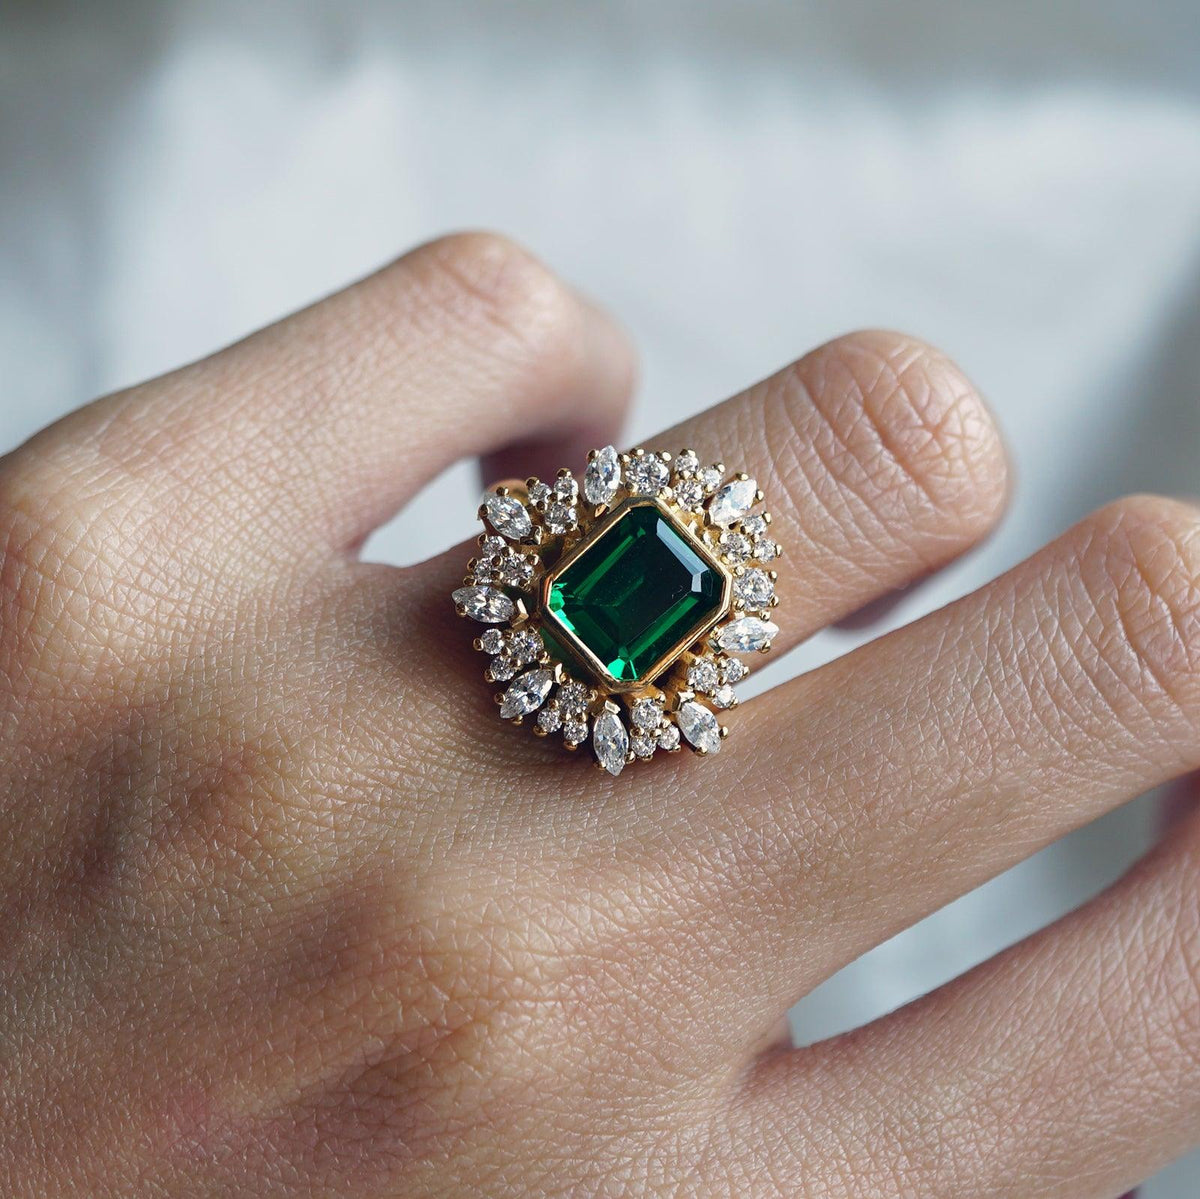 Forbidden Garden Emerald Diamond Ring in 14K and 18K Gold - Tippy Taste Jewelry